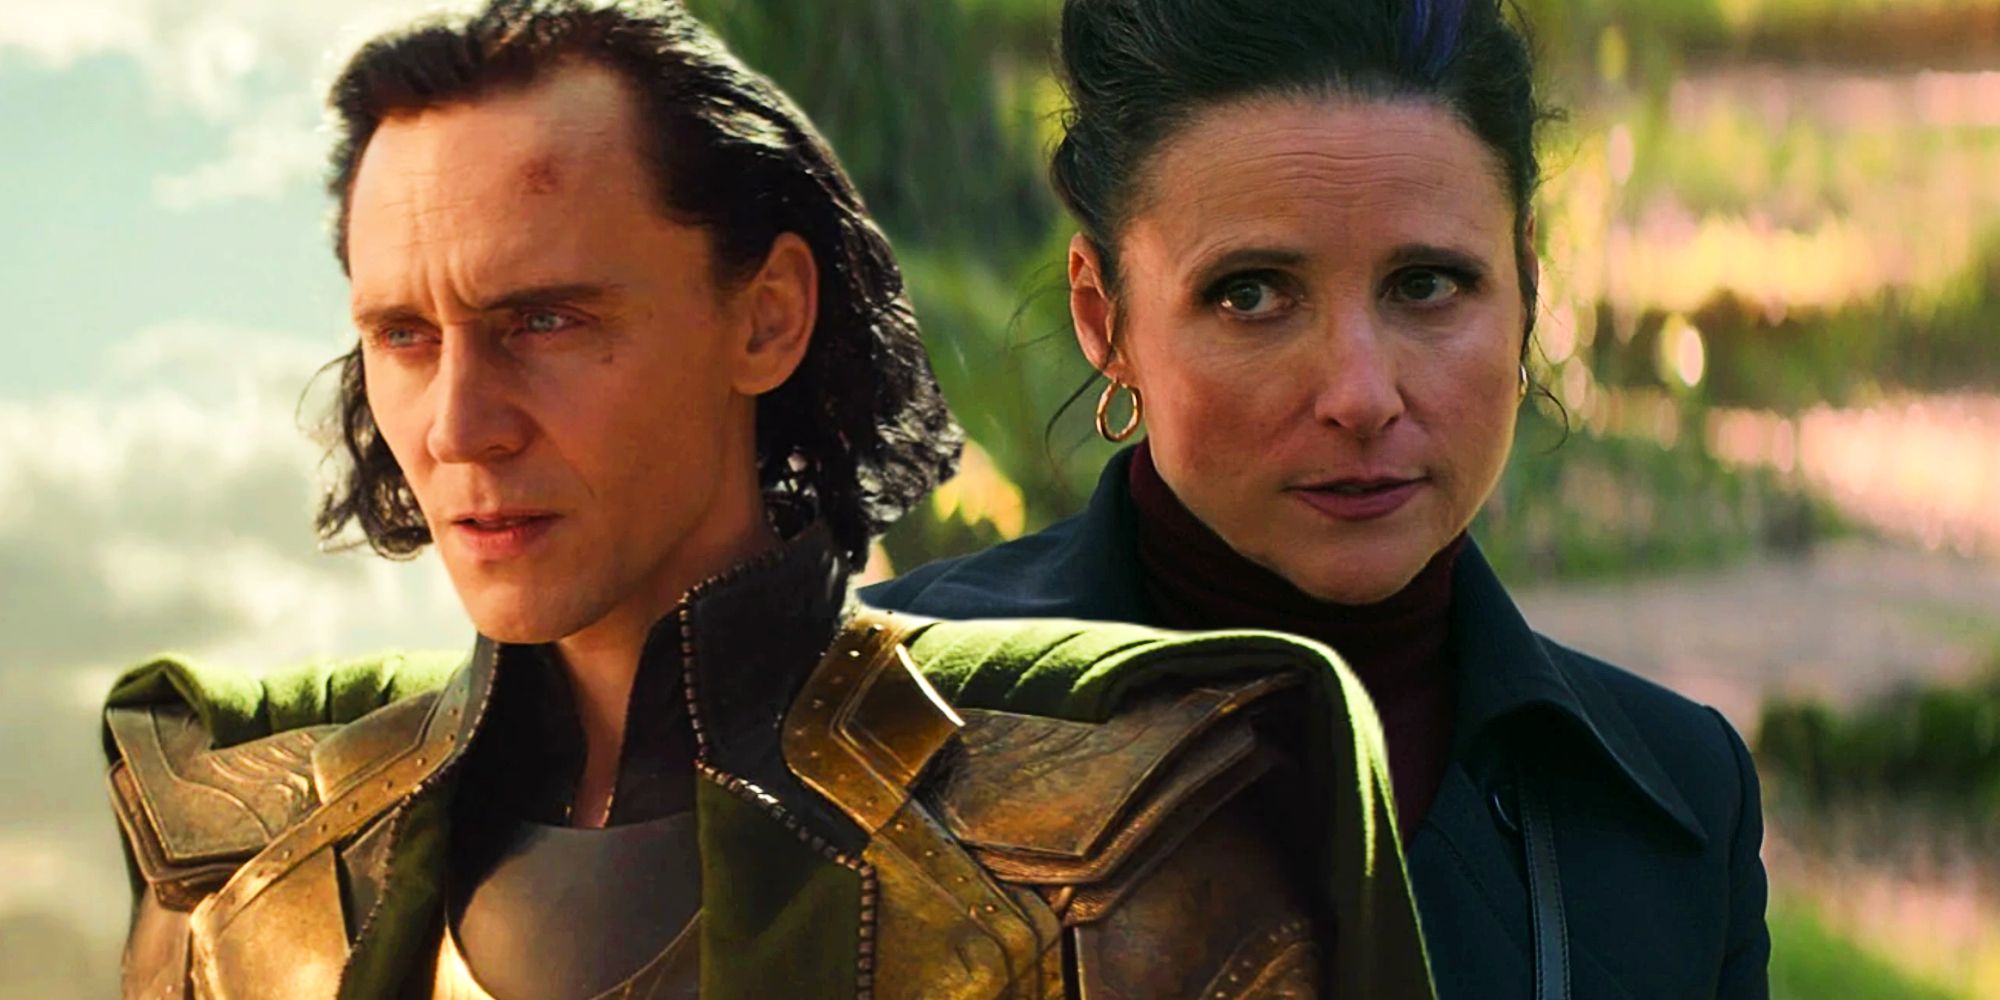 Loki in the Loki series and Val in Black Widow